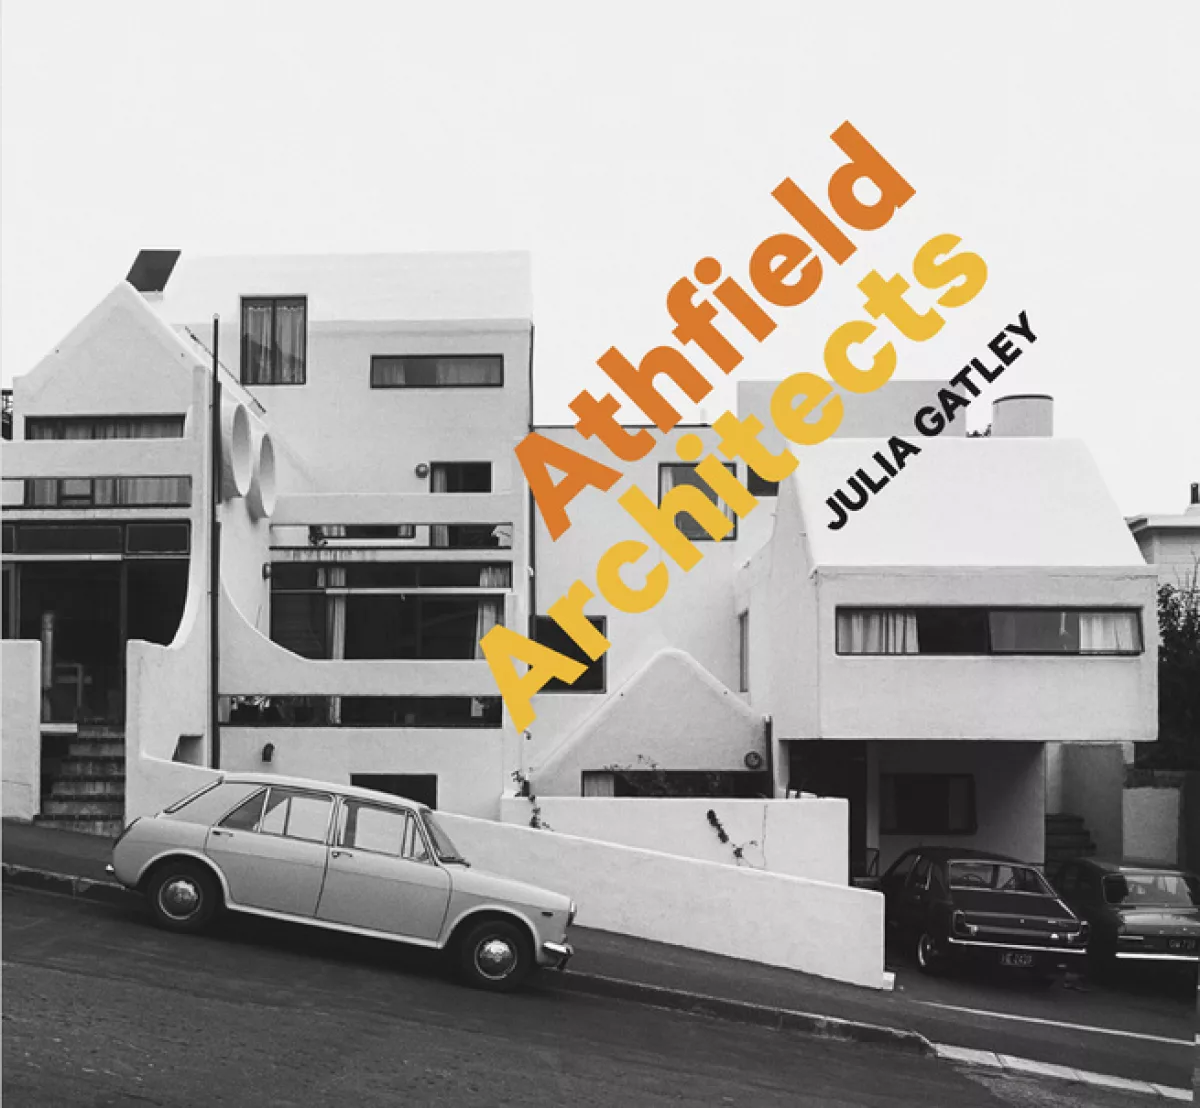 Gatley athfield architects coverlowres